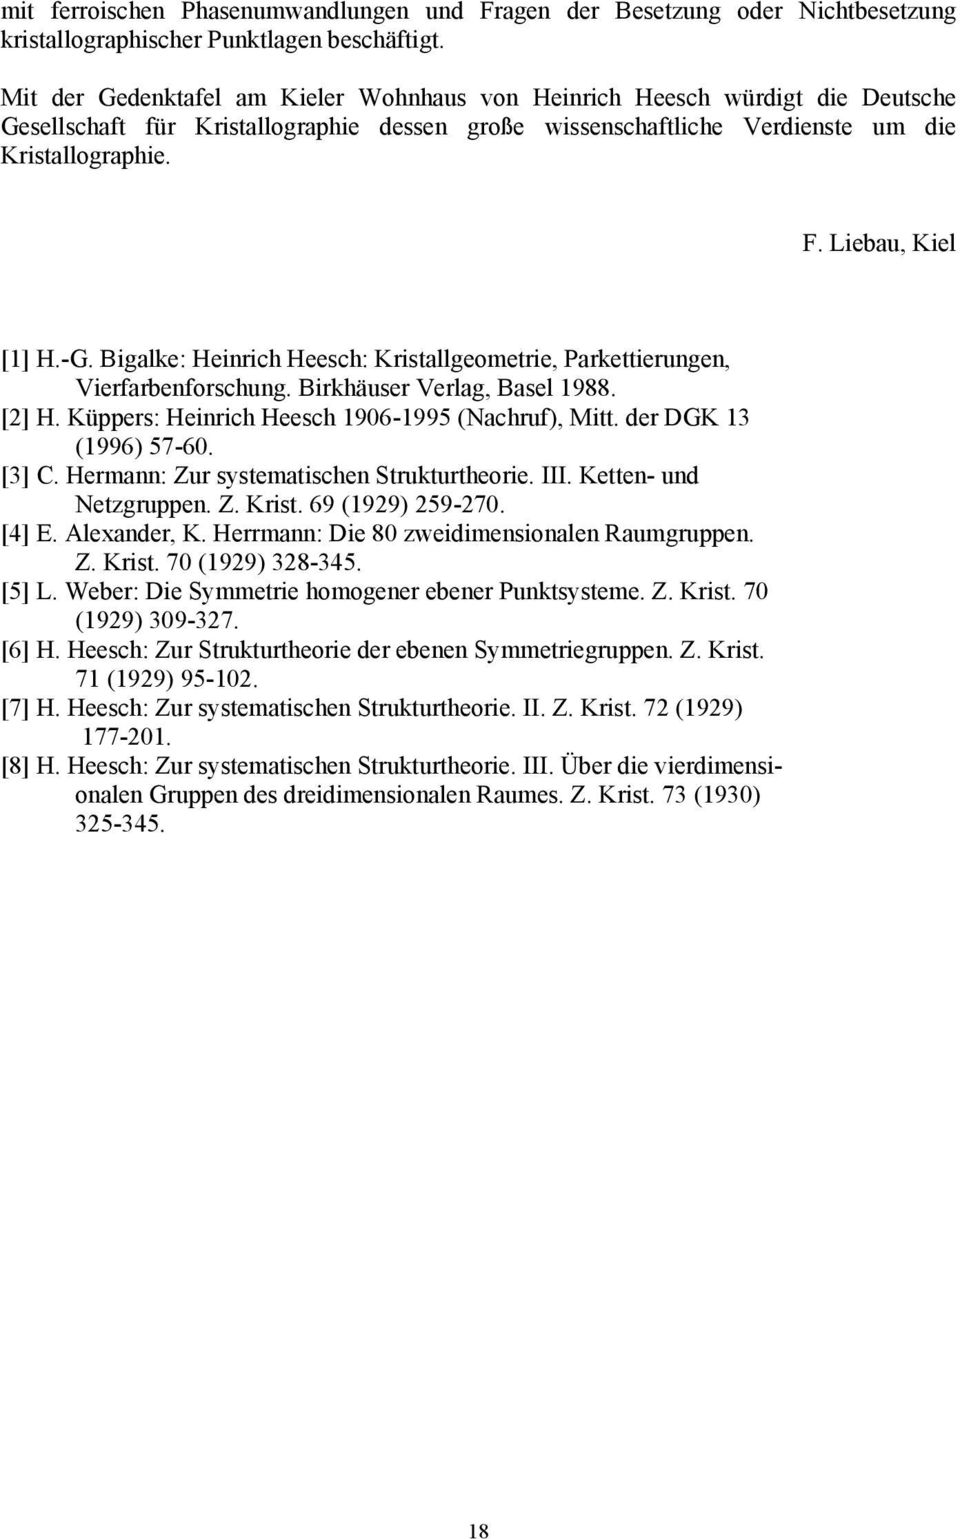 Liebau, Kiel [1] H.-G. Bigalke: Heinrich Heesch: Kristallgeometrie, Parkettierungen, Vierfarbenforschung. Birkhäuser Verlag, Basel 1988. [2] H. Küppers: Heinrich Heesch 1906-1995 (Nachruf), Mitt.